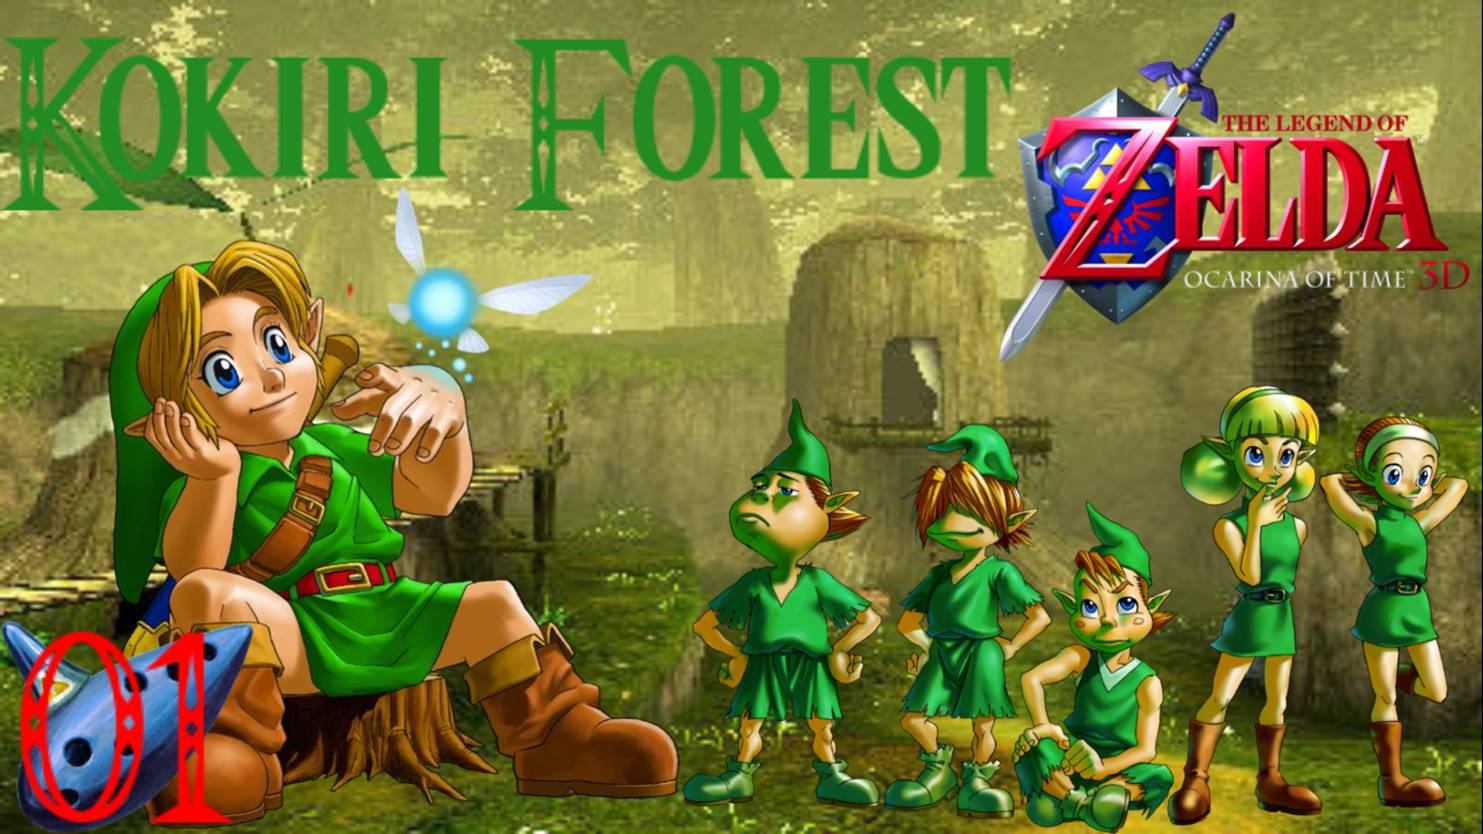 Legend of Zelda: Ocarina of Time 3D - Complete Walkthrough (100%) 